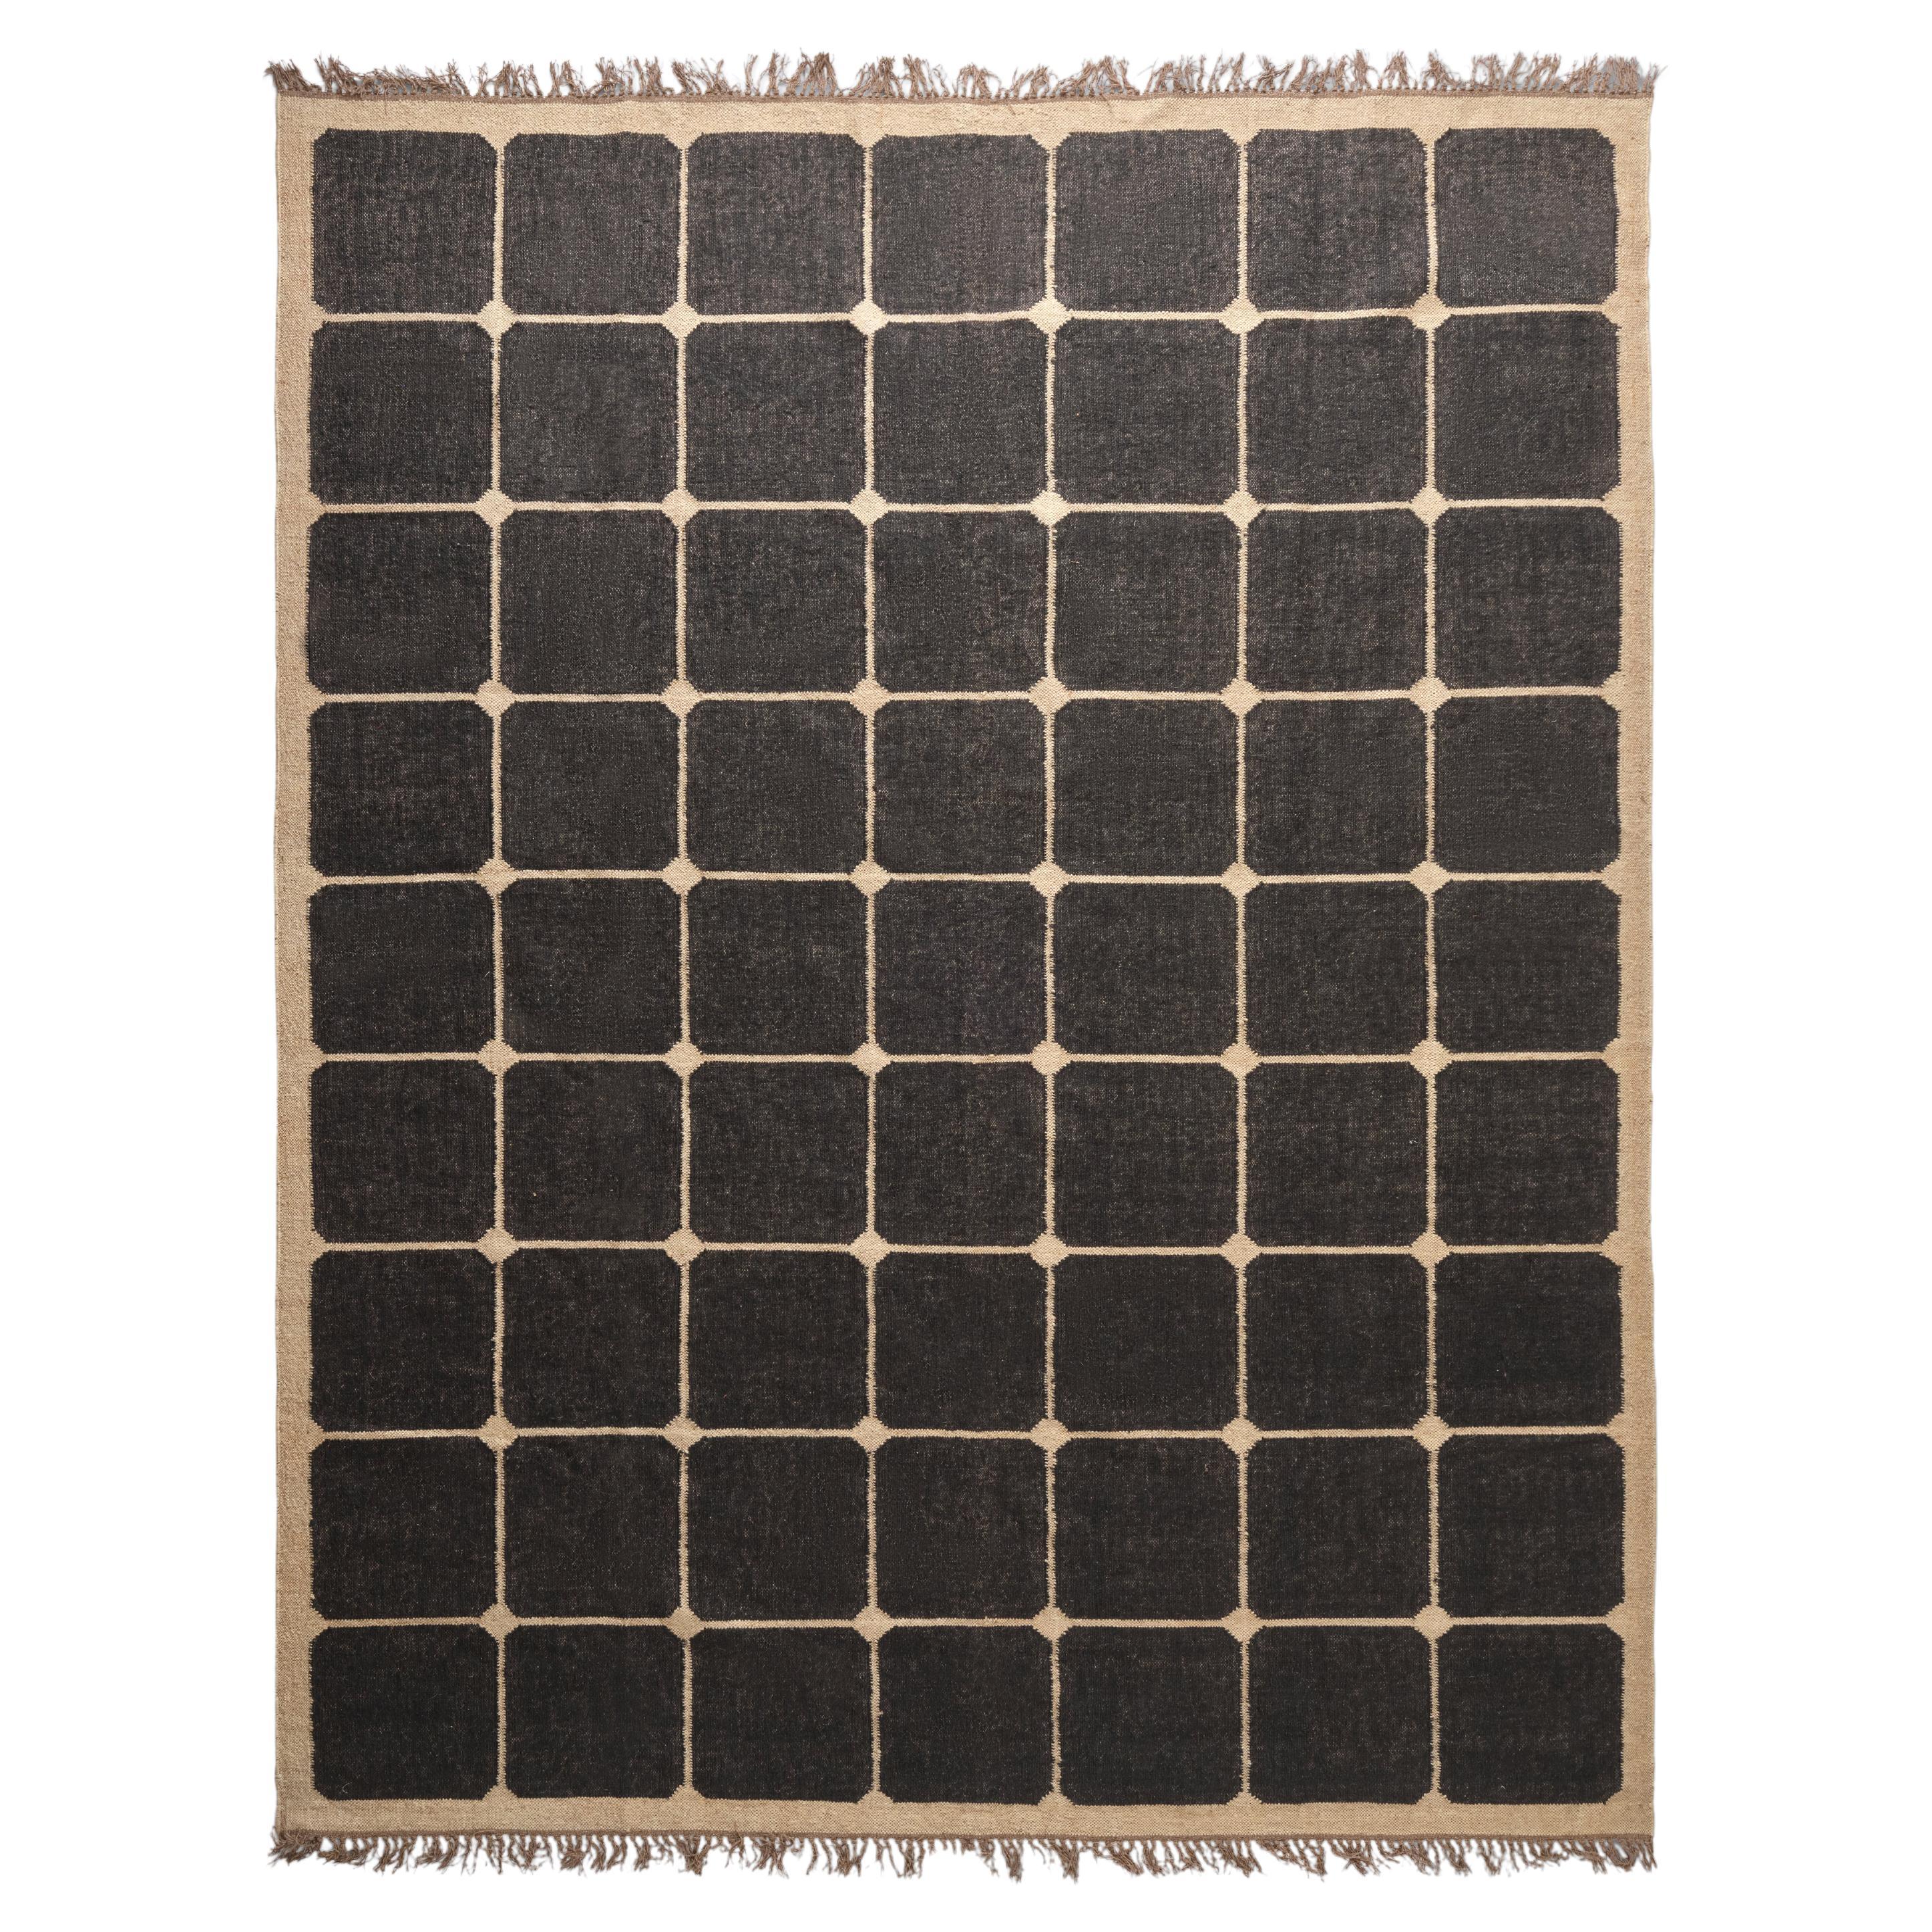 The Forsyth Checkerboard Rug - Dark Tile Checks in Off Black, 8x10  For Sale